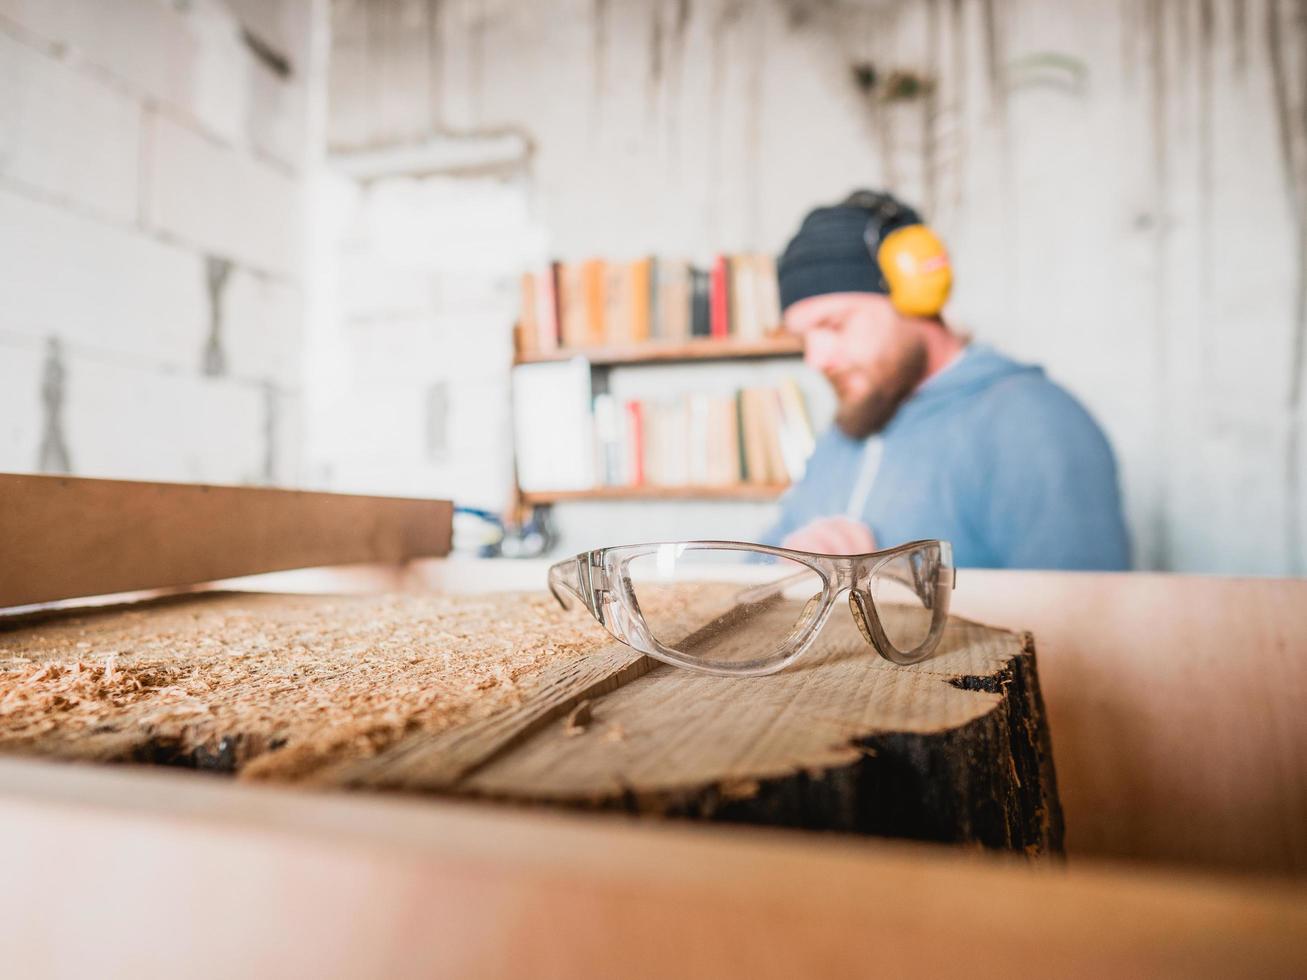 Gafas de seguridad de carpintero en tocón de madera. taller de carpinteria foto